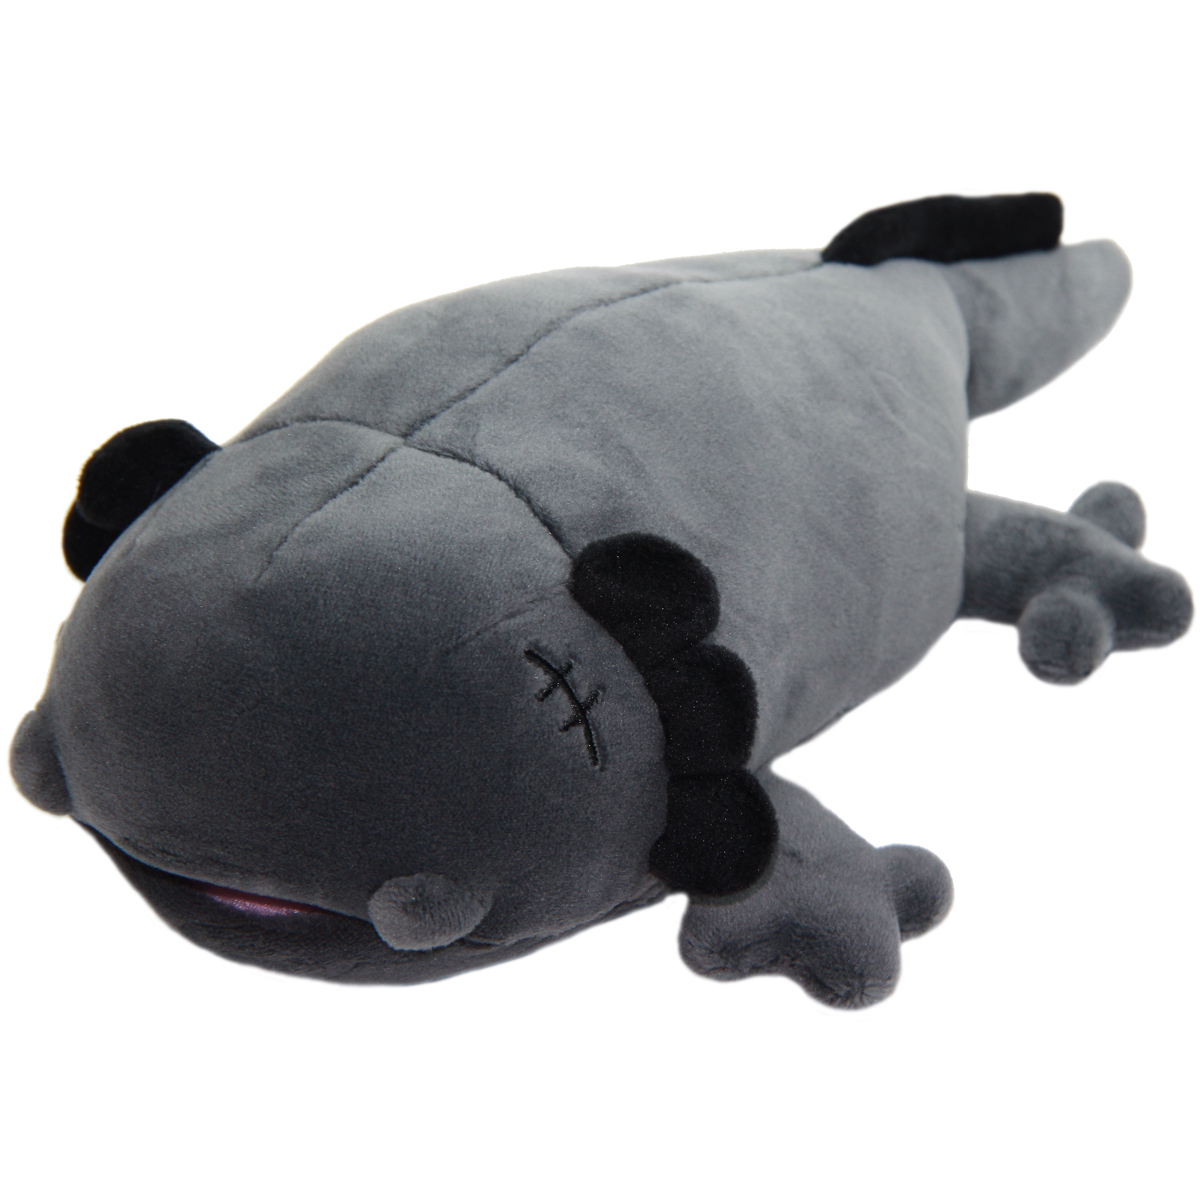 Aquarium Collection Plush Axolotl Plush Toy Super Soft Stuffed Animal Black Grey Uparupa